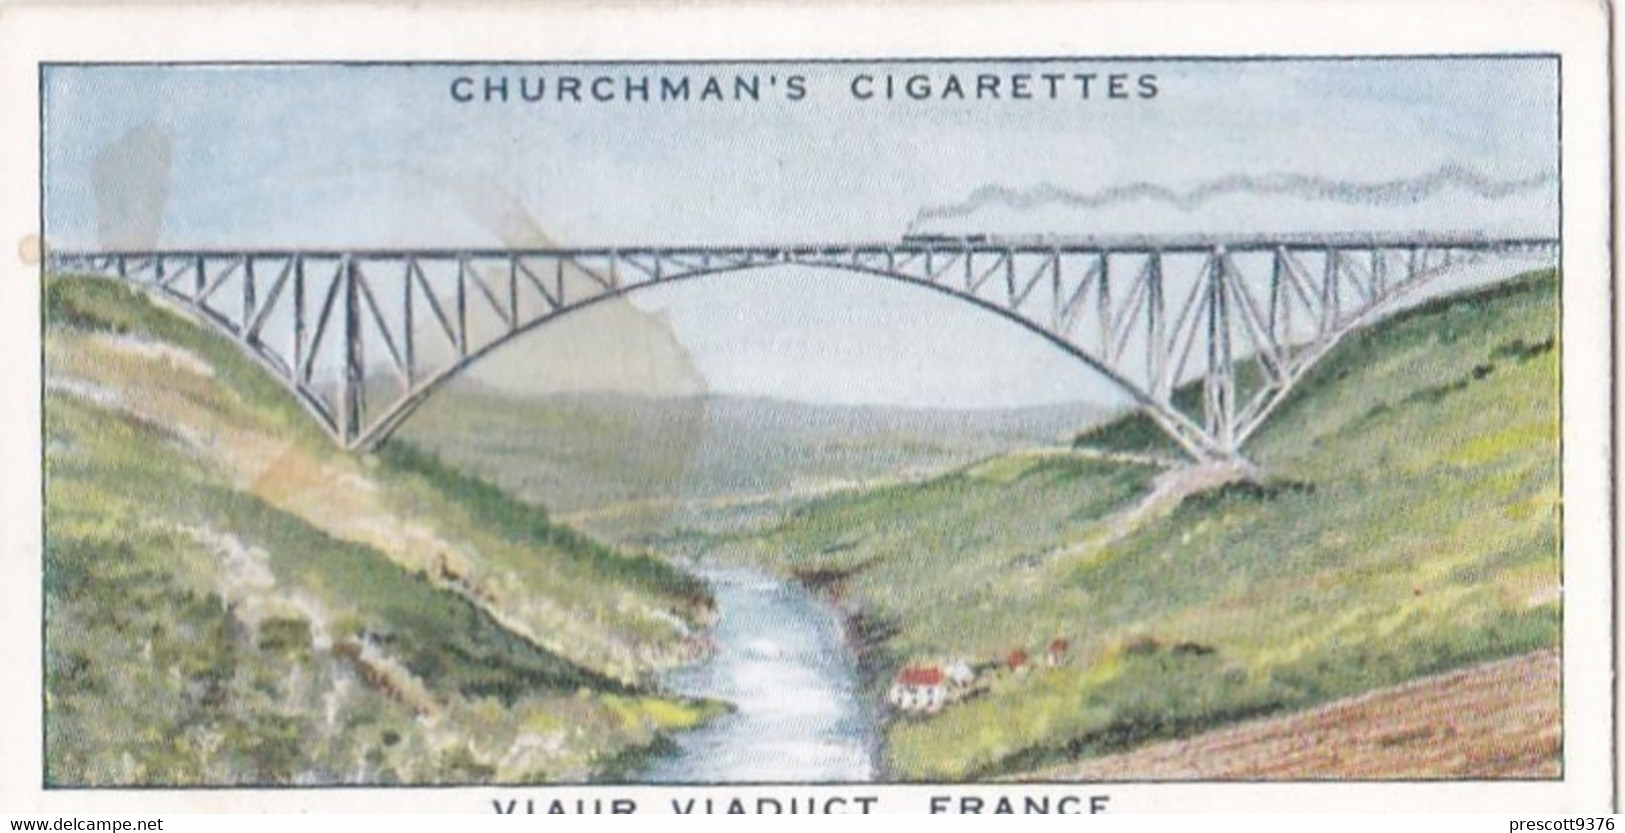 Wonderful Railway Travel, 1937 - 20 Viaur Viaduct, France  - Churchman Cigarette Card - Trains - Churchman